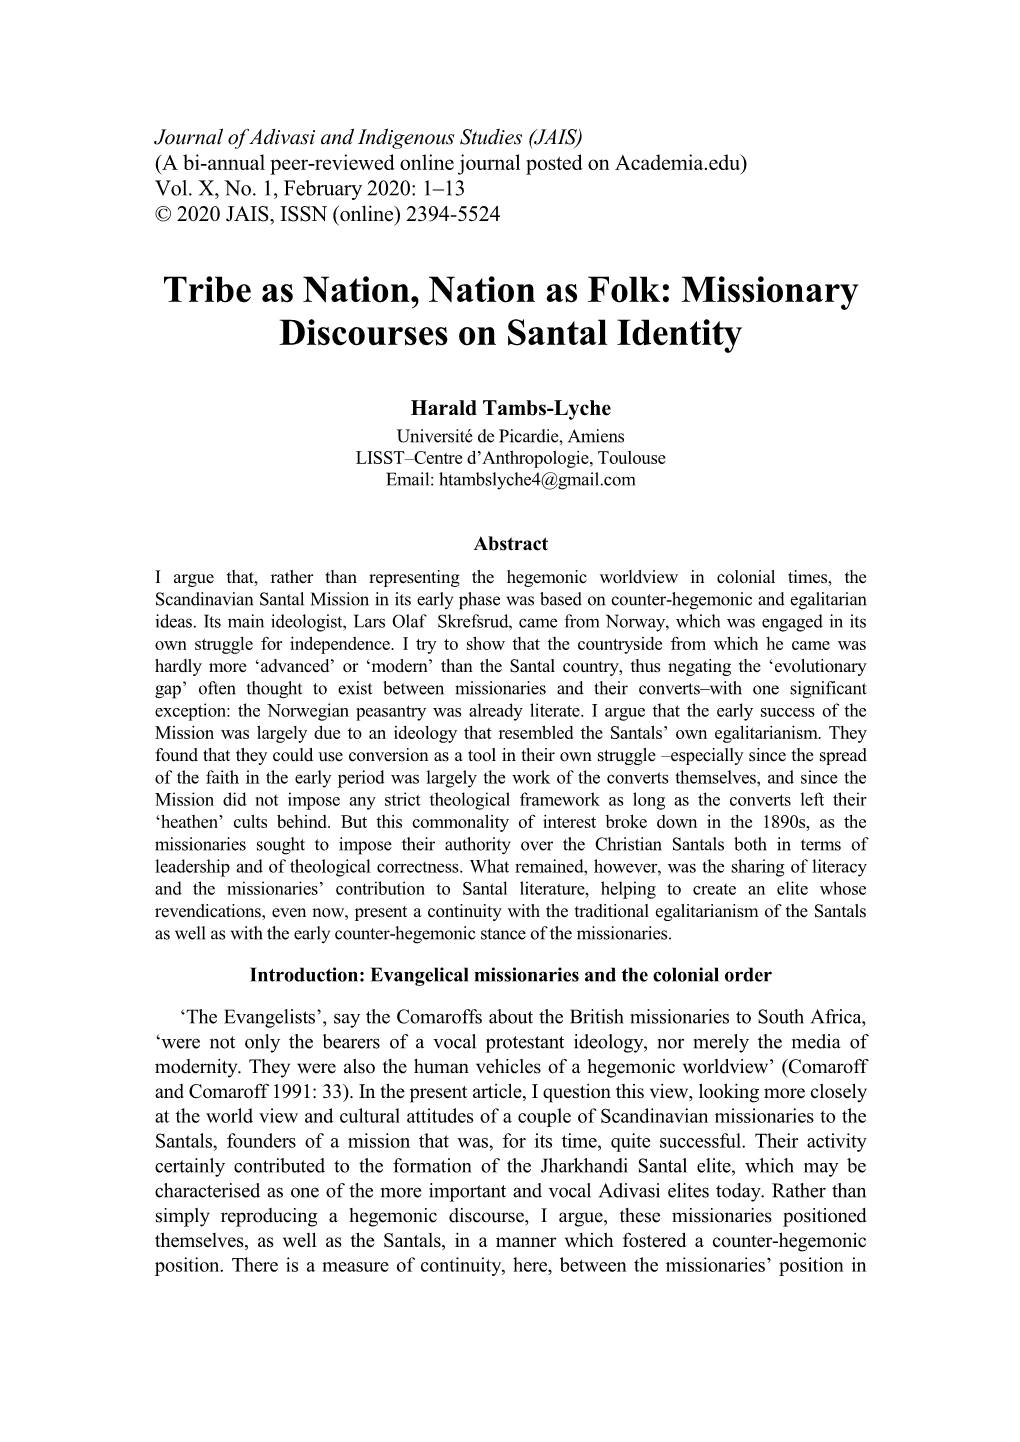 Tribe As Nation, Nation As Folk: Missionary Discourses on Santal Identity